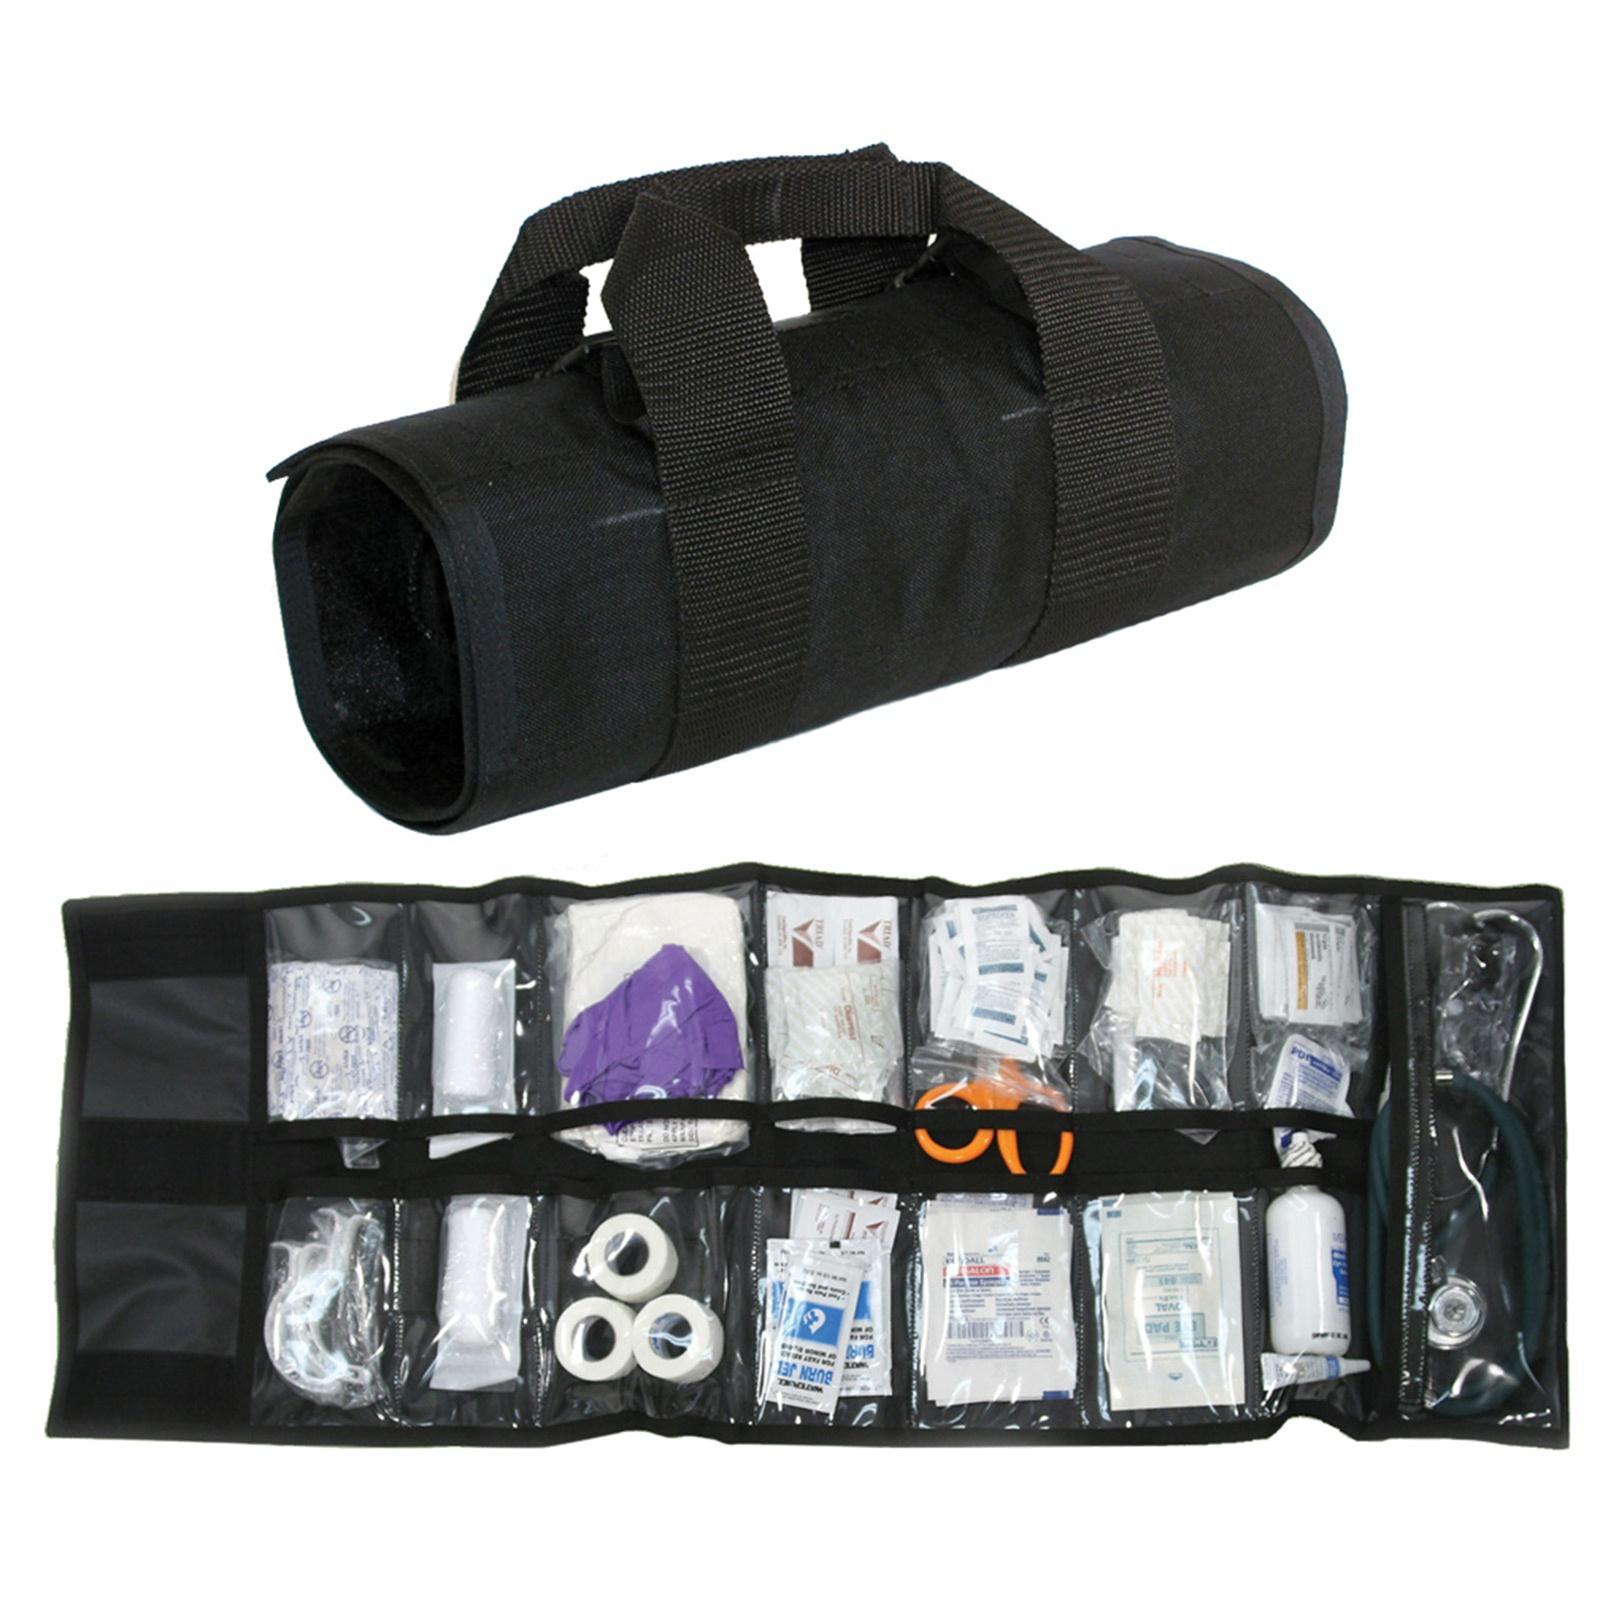 Amazon.com : BLACKHAWK A.L.E.R.T. Load Out Bag with Wheels : Gun Cases :  Sports & Outdoors